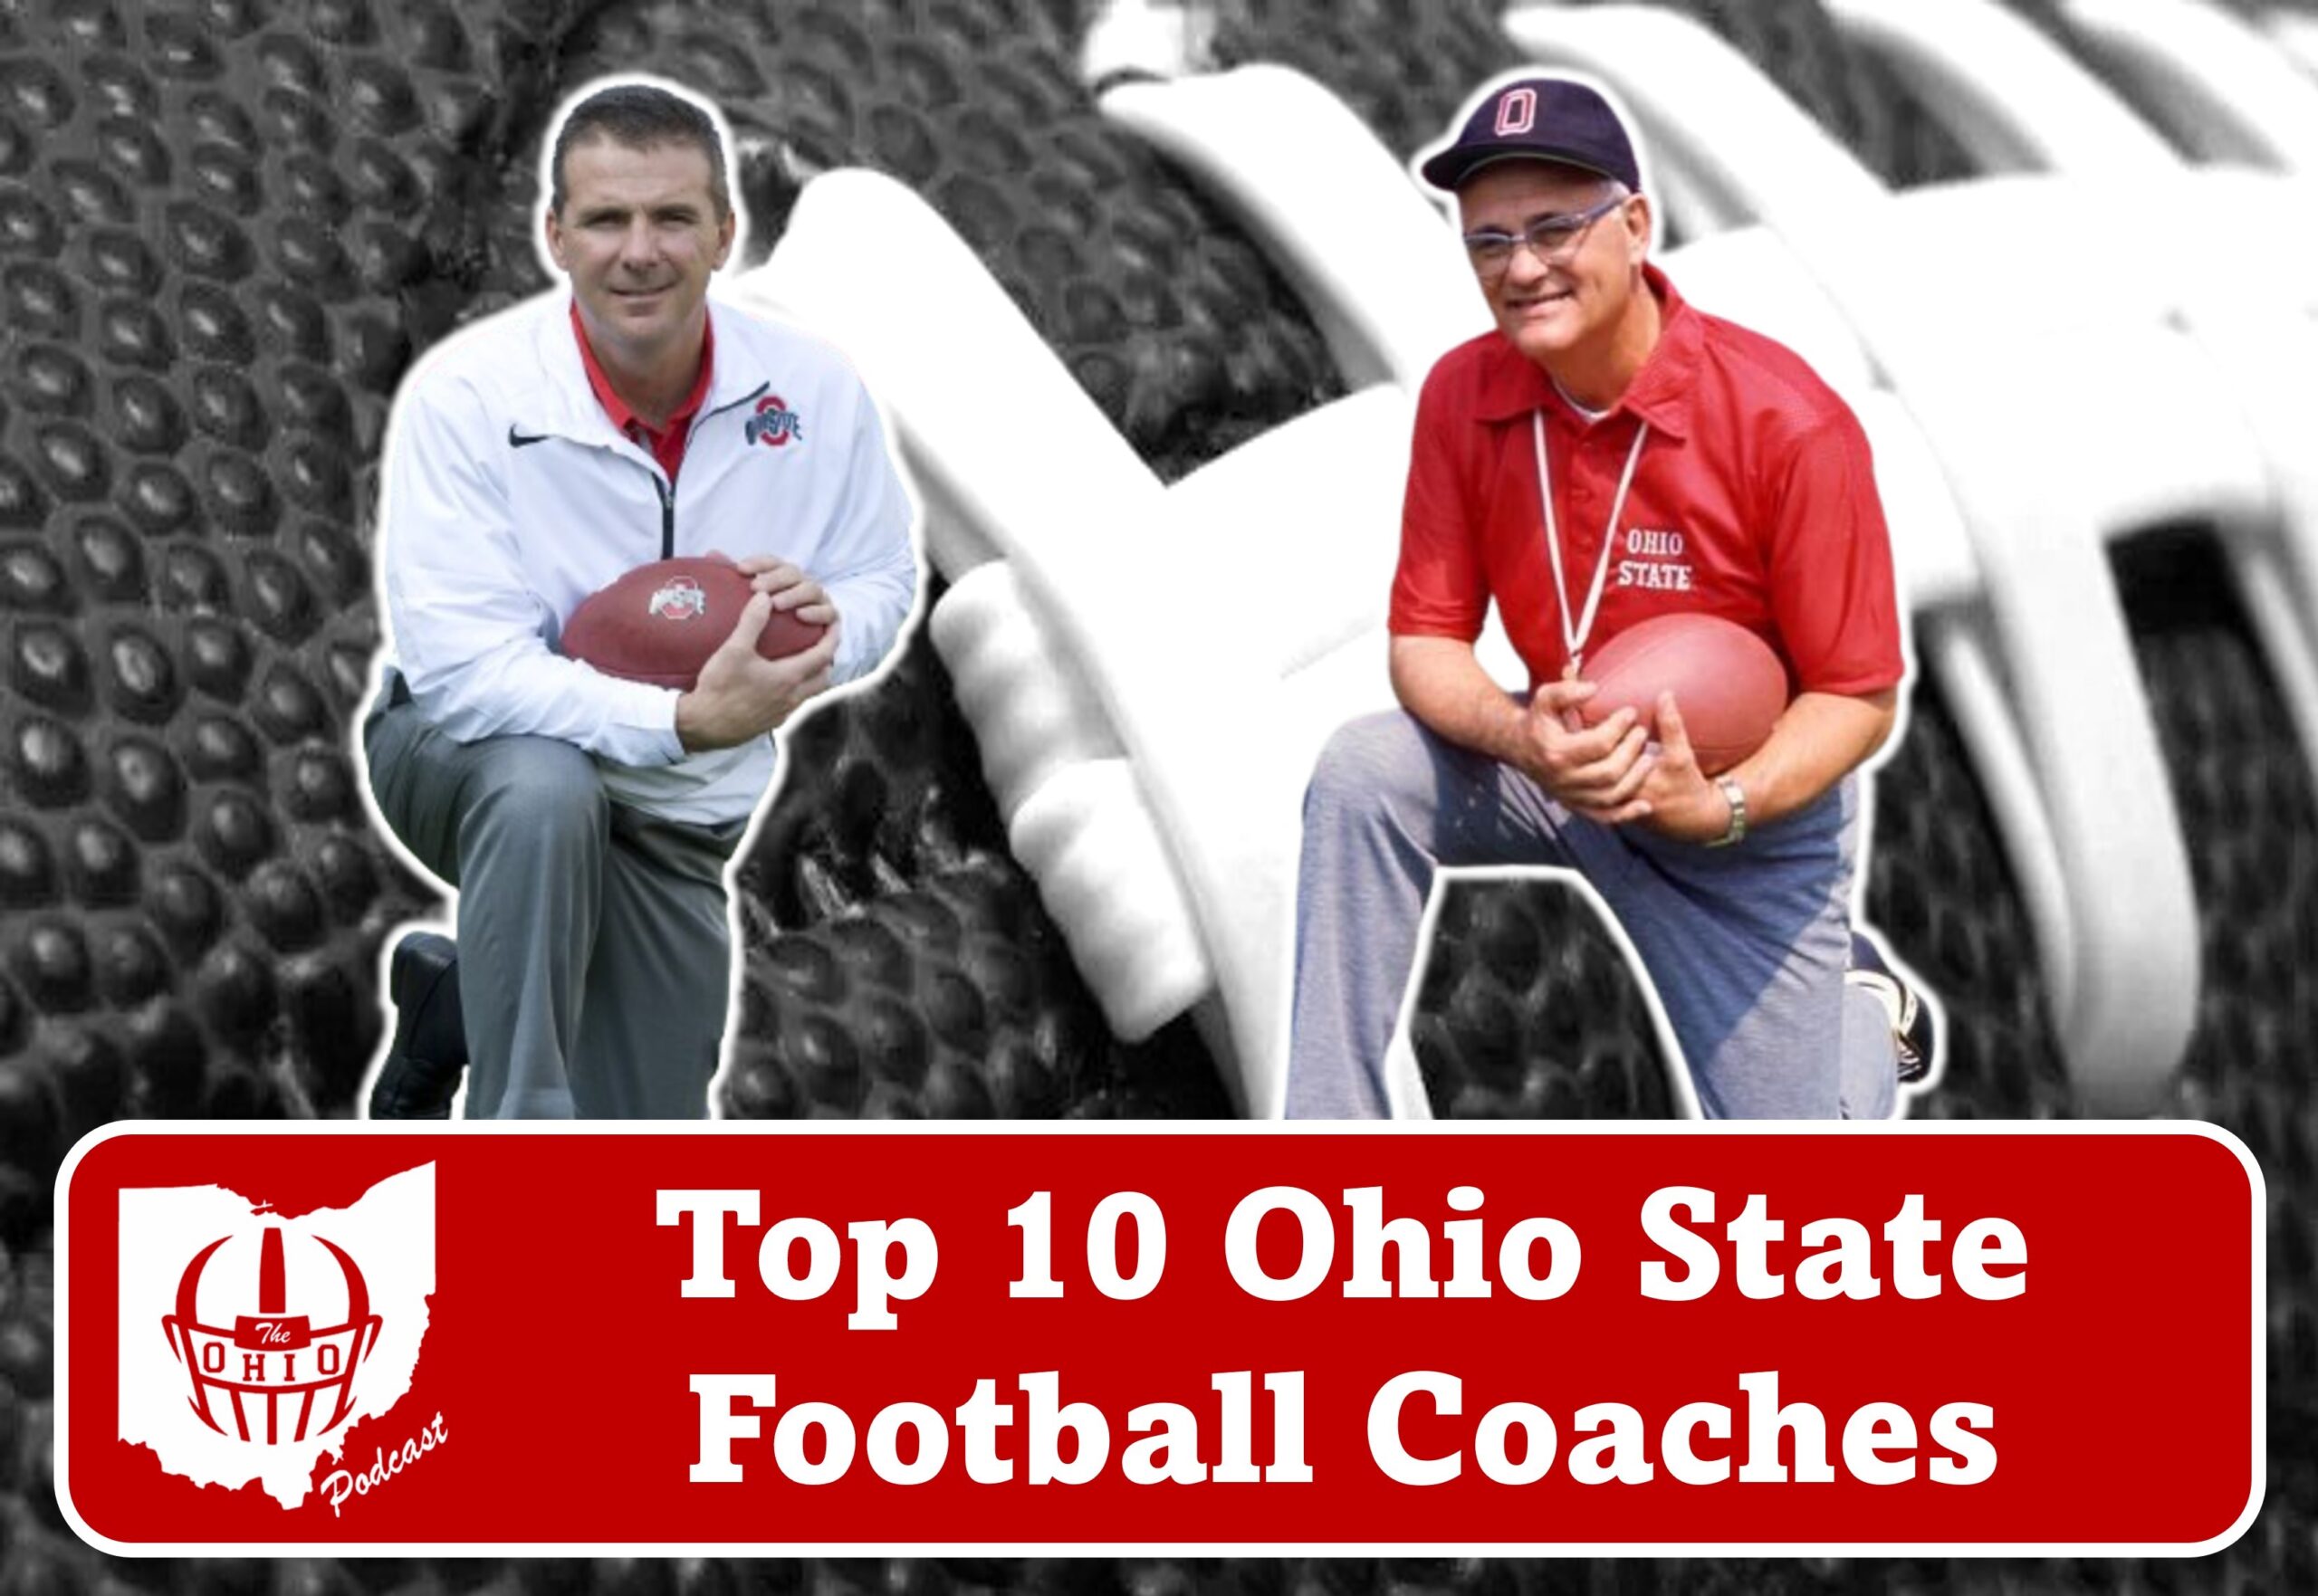 Top 10 Ohio State Football Coaches